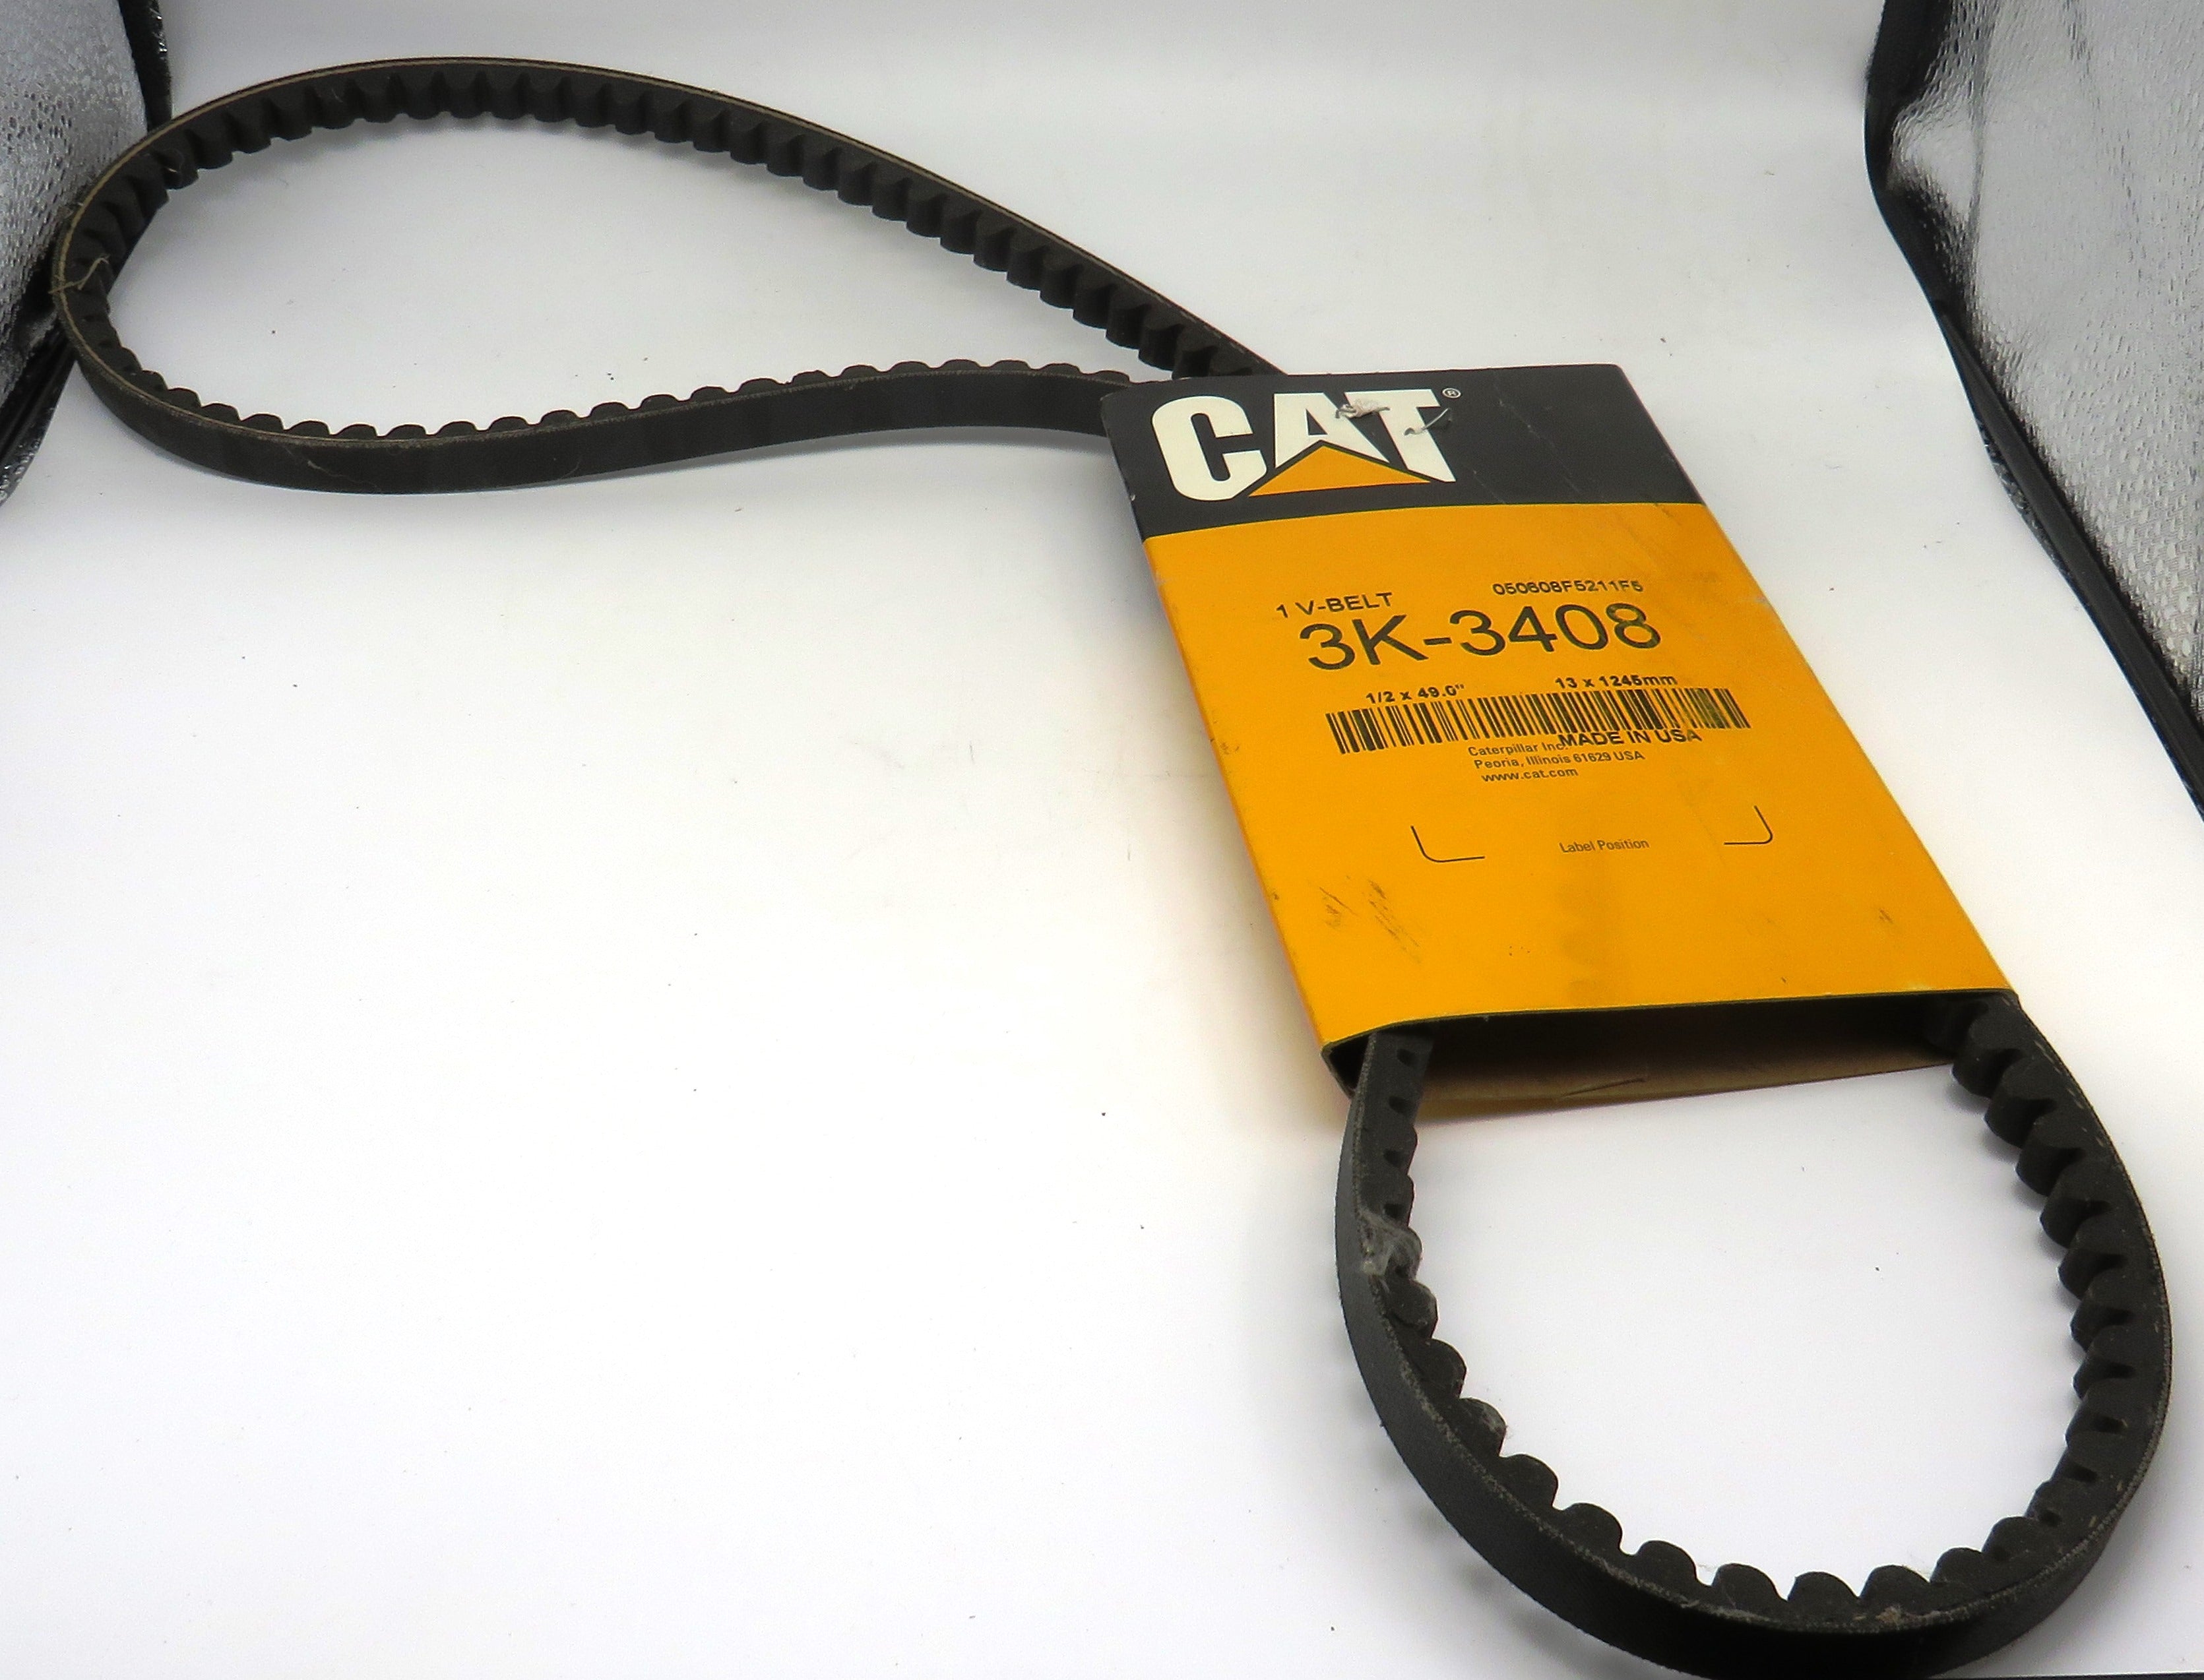 3K-3408 Caterpillar CAT Alternator Belt for CAT 3208 Engine